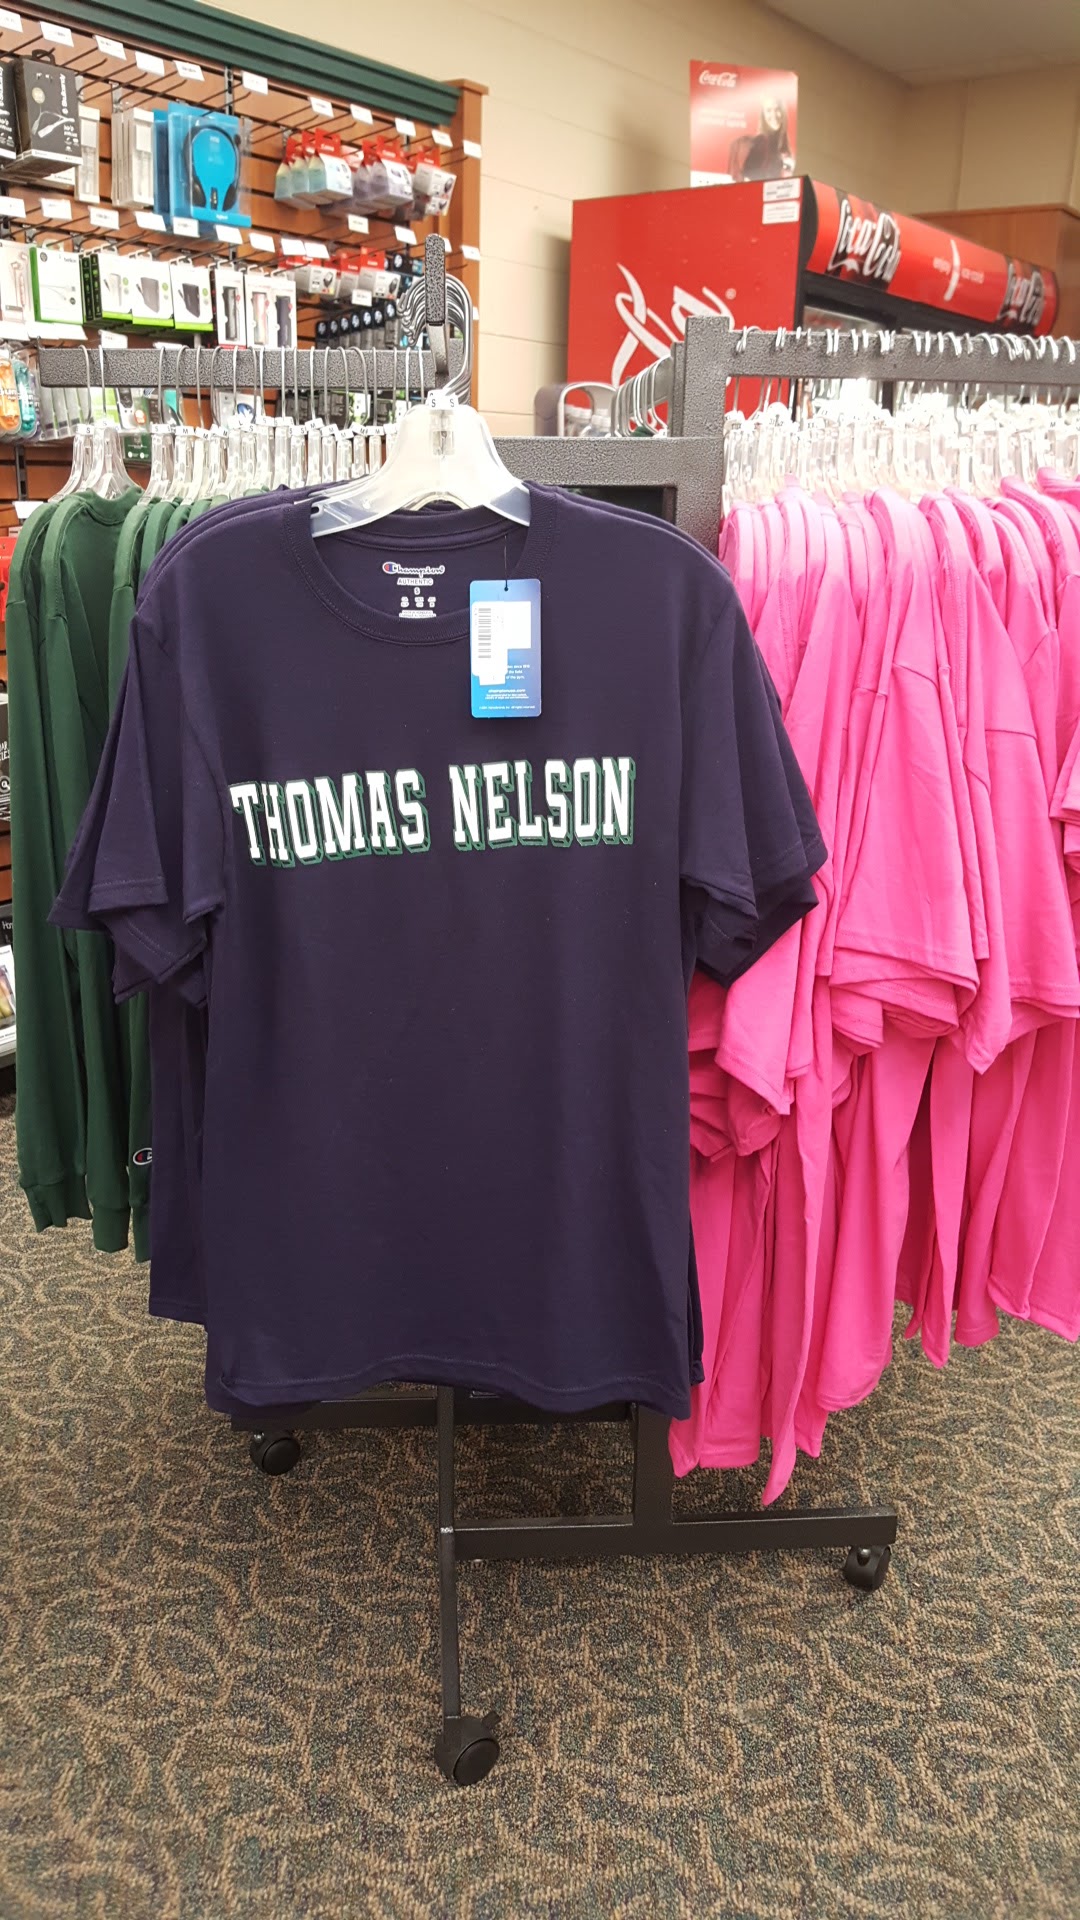 Thomas Nelson Community College (TNCC) Bookstore